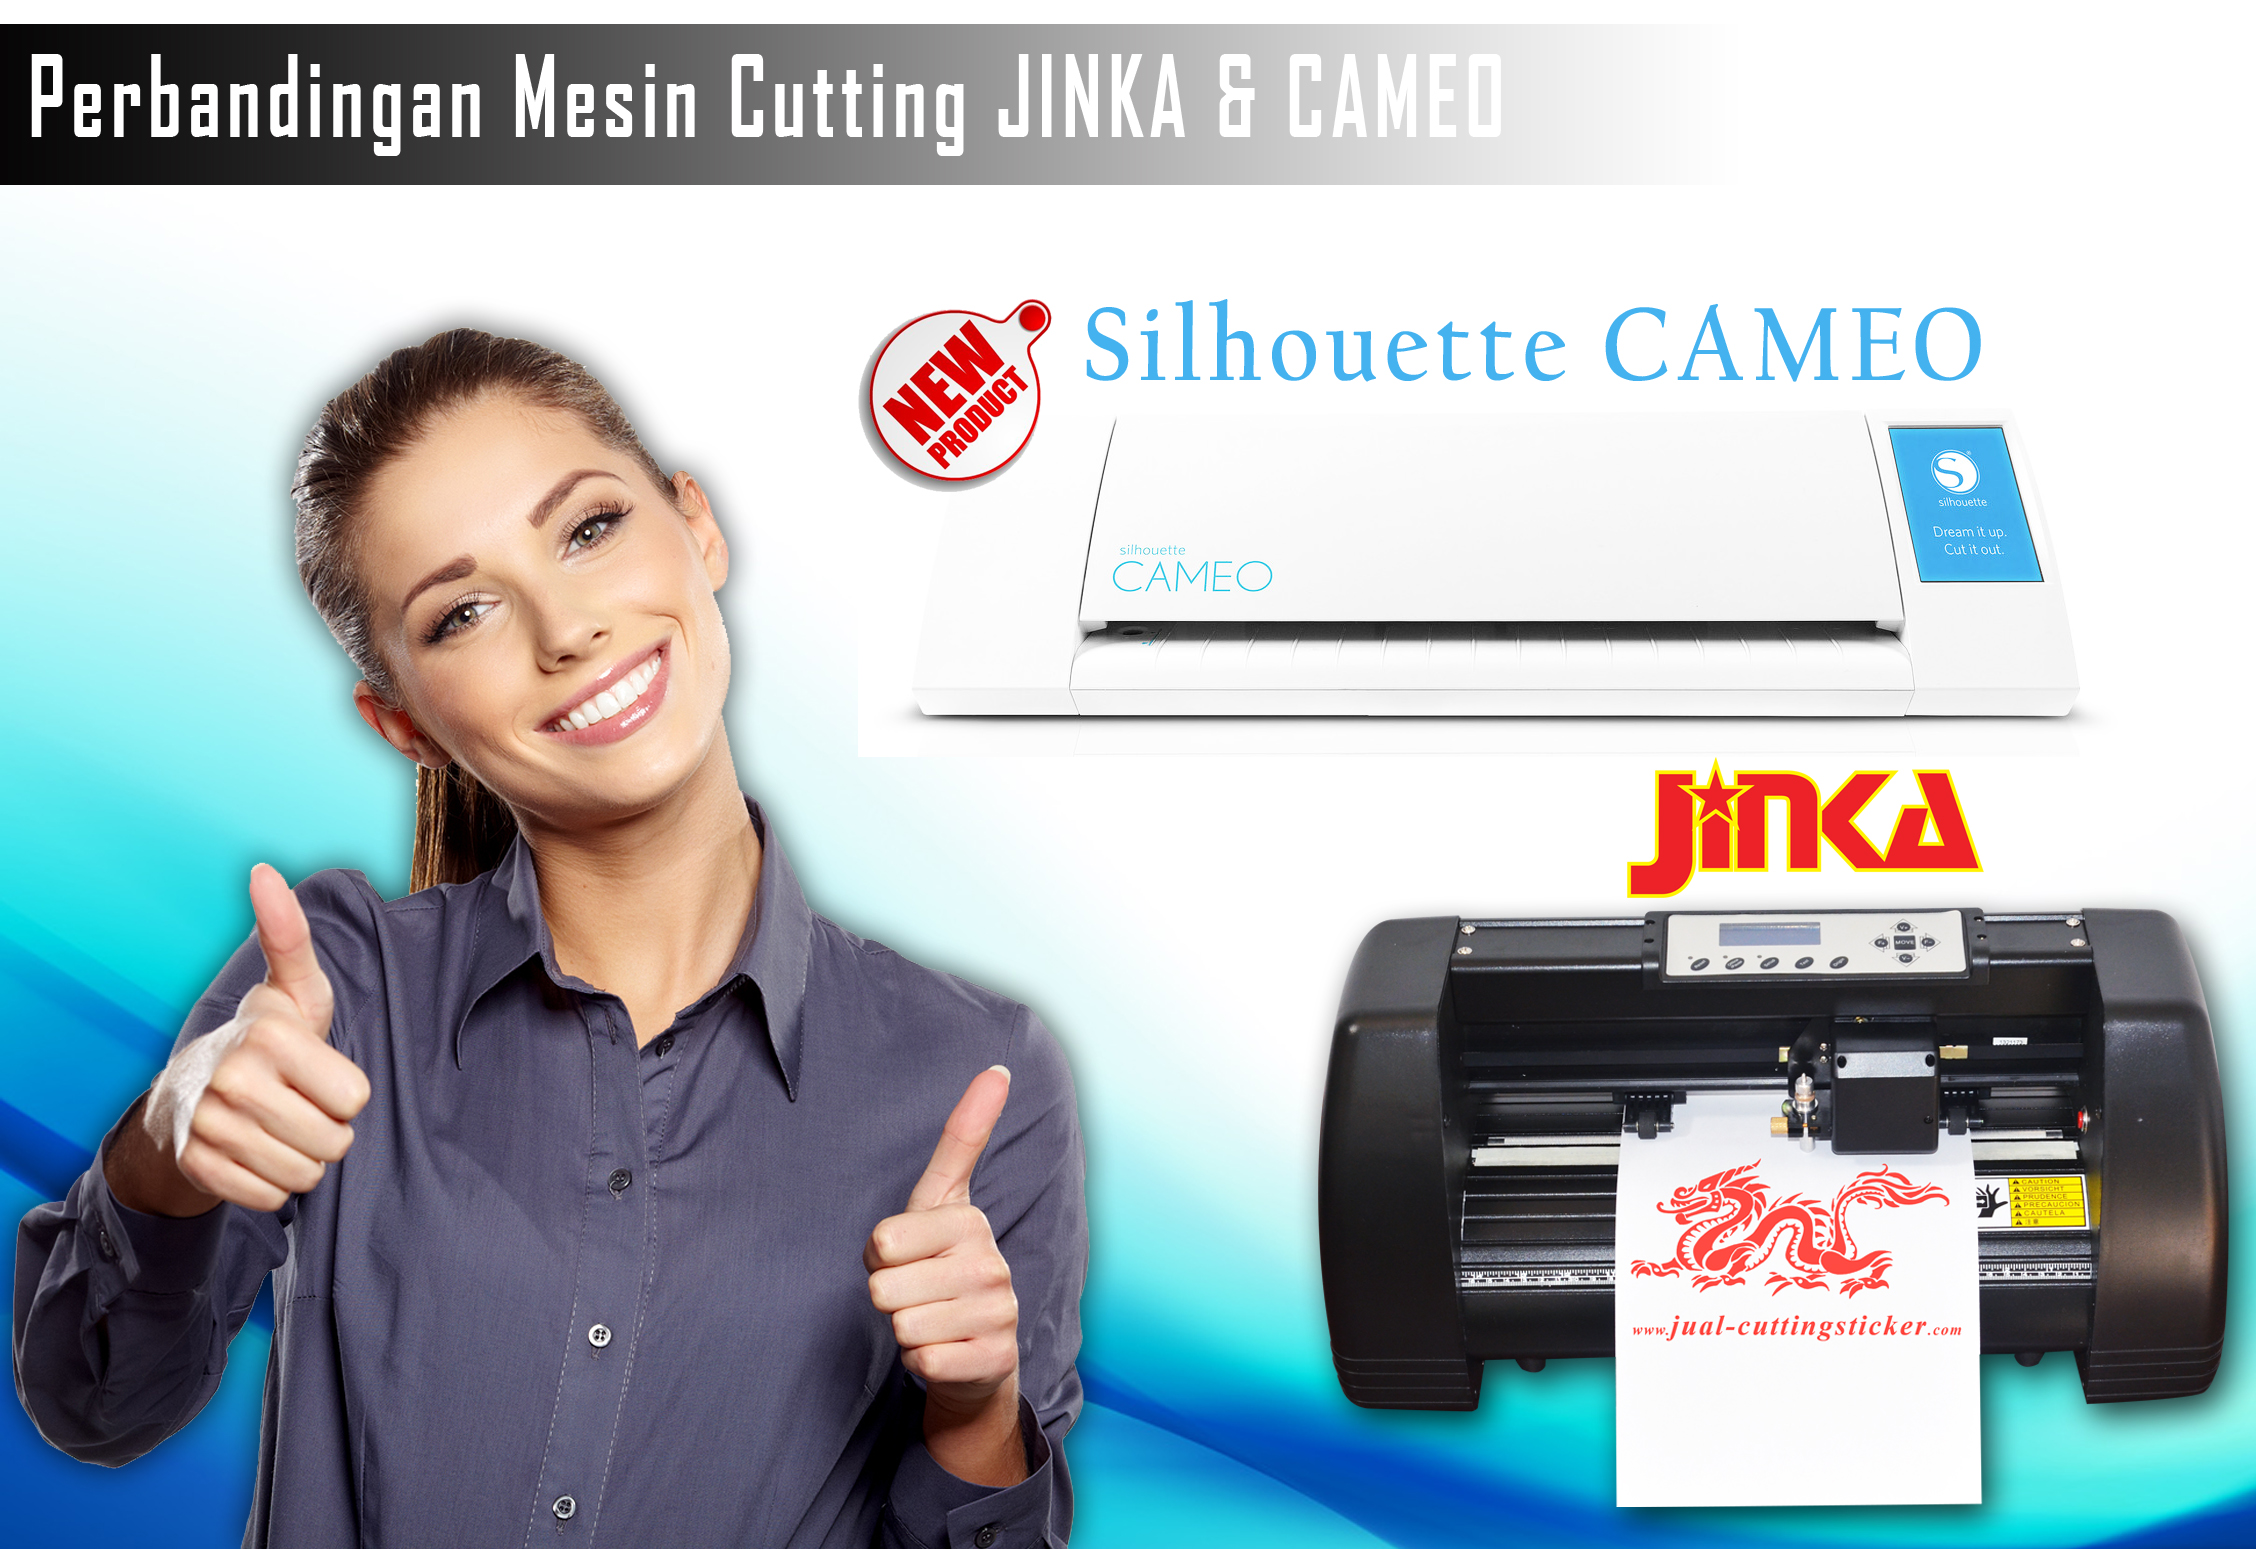 Perbandingan Mesin Cutting JINKA dan Silhouette CAMEO